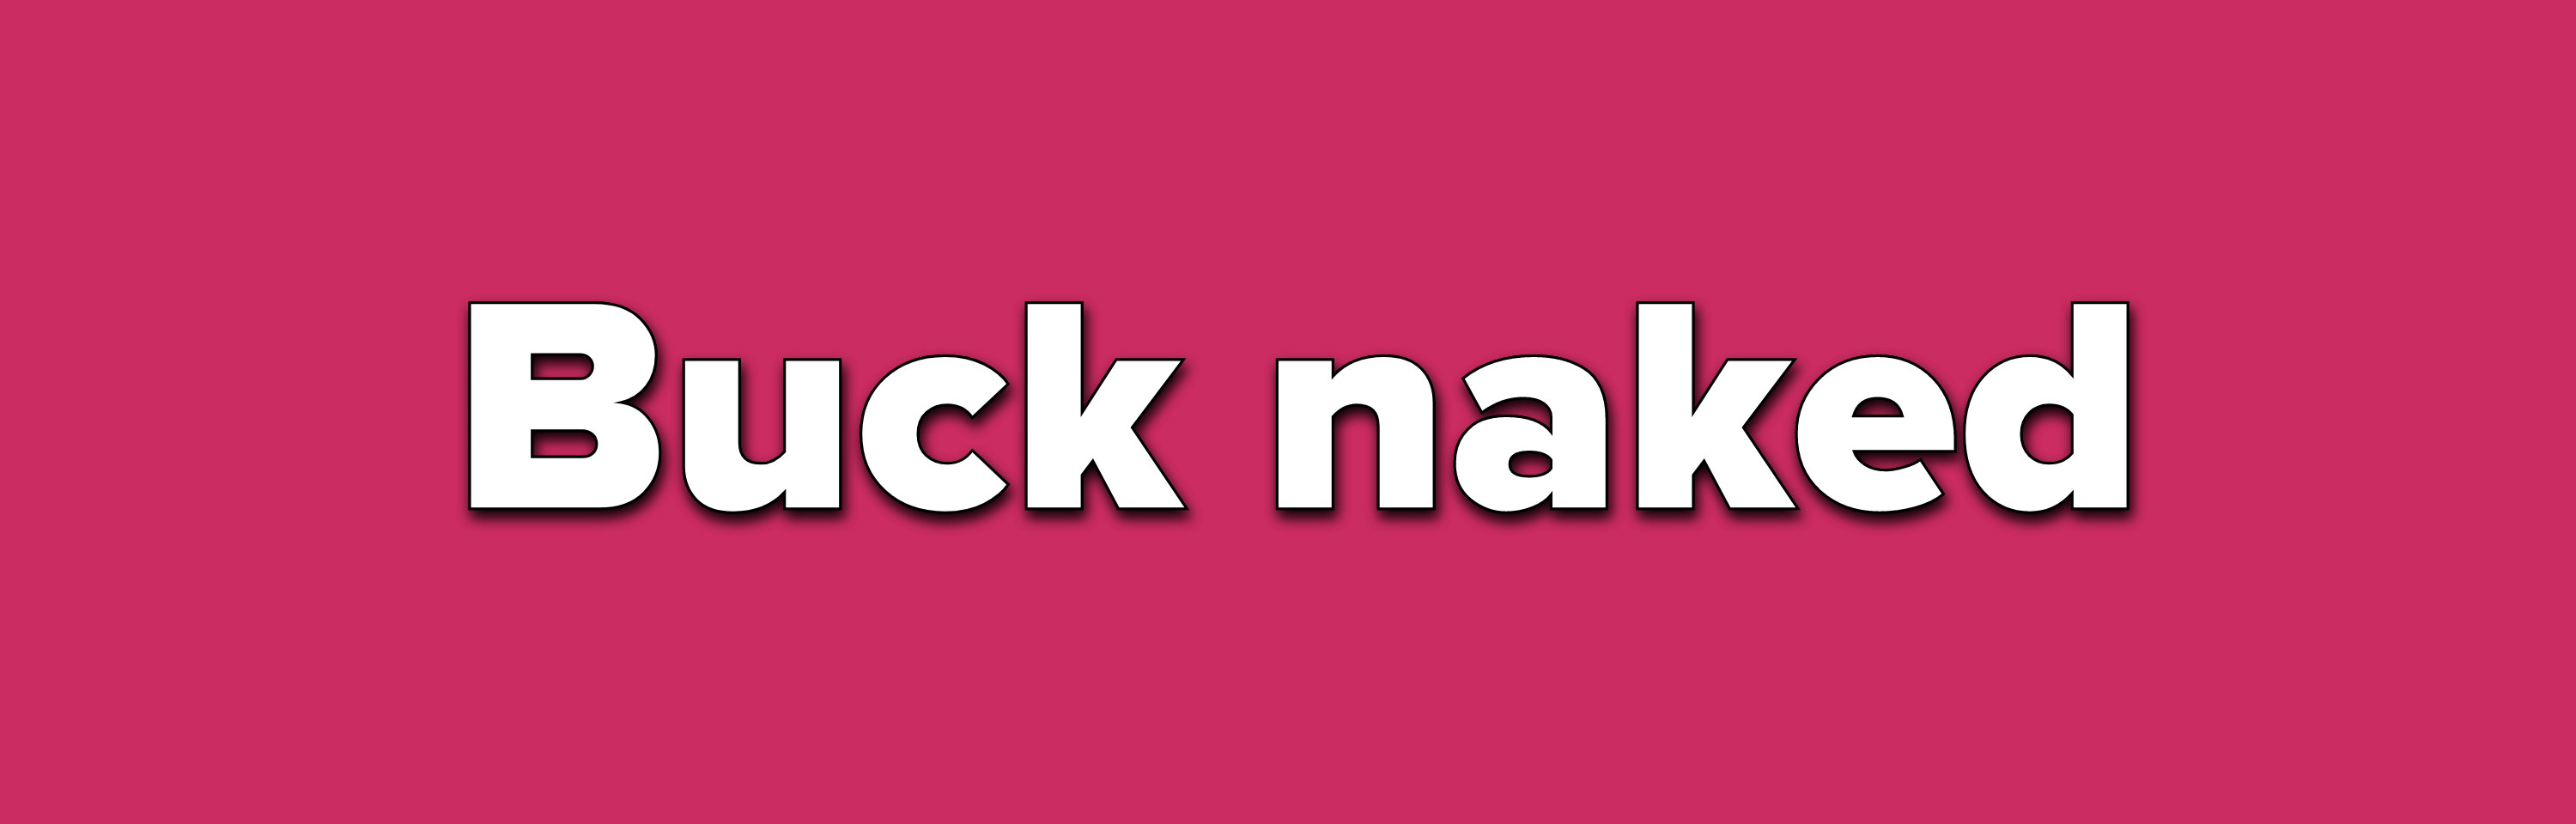 Buck naked